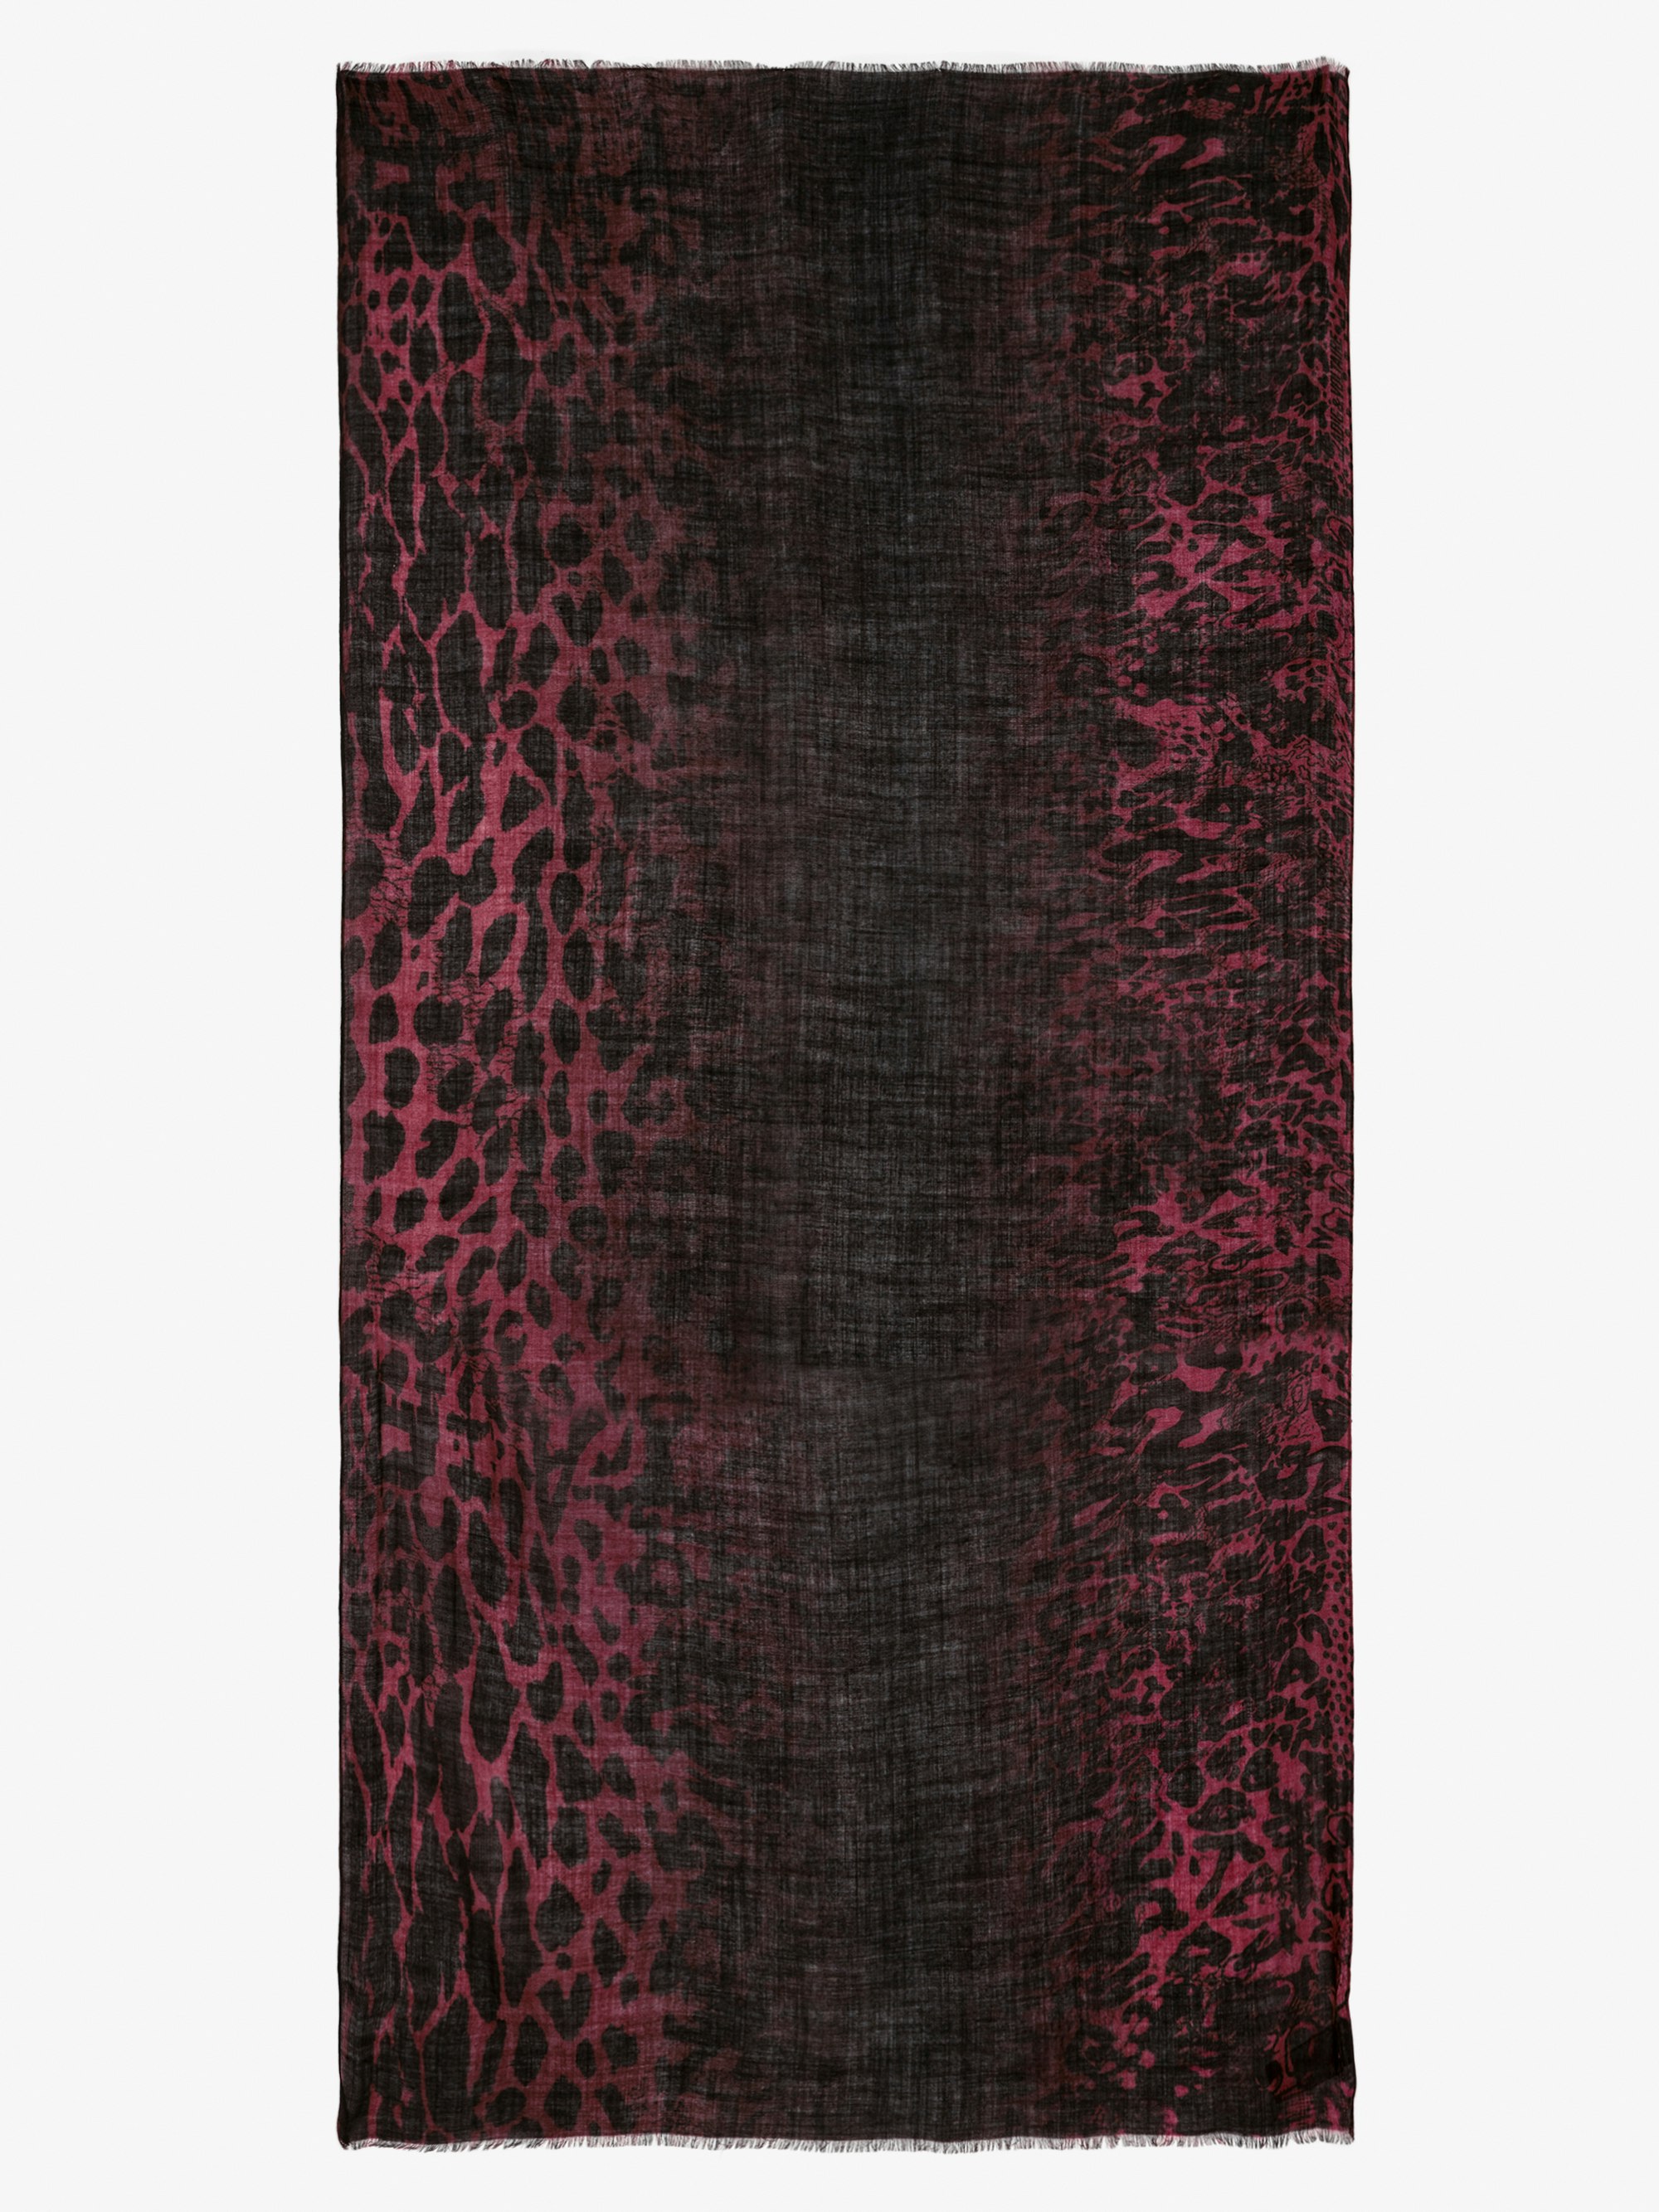 Foulard Judy - Foulard in lana rossa con stampa leopardata effetto tie & dye.